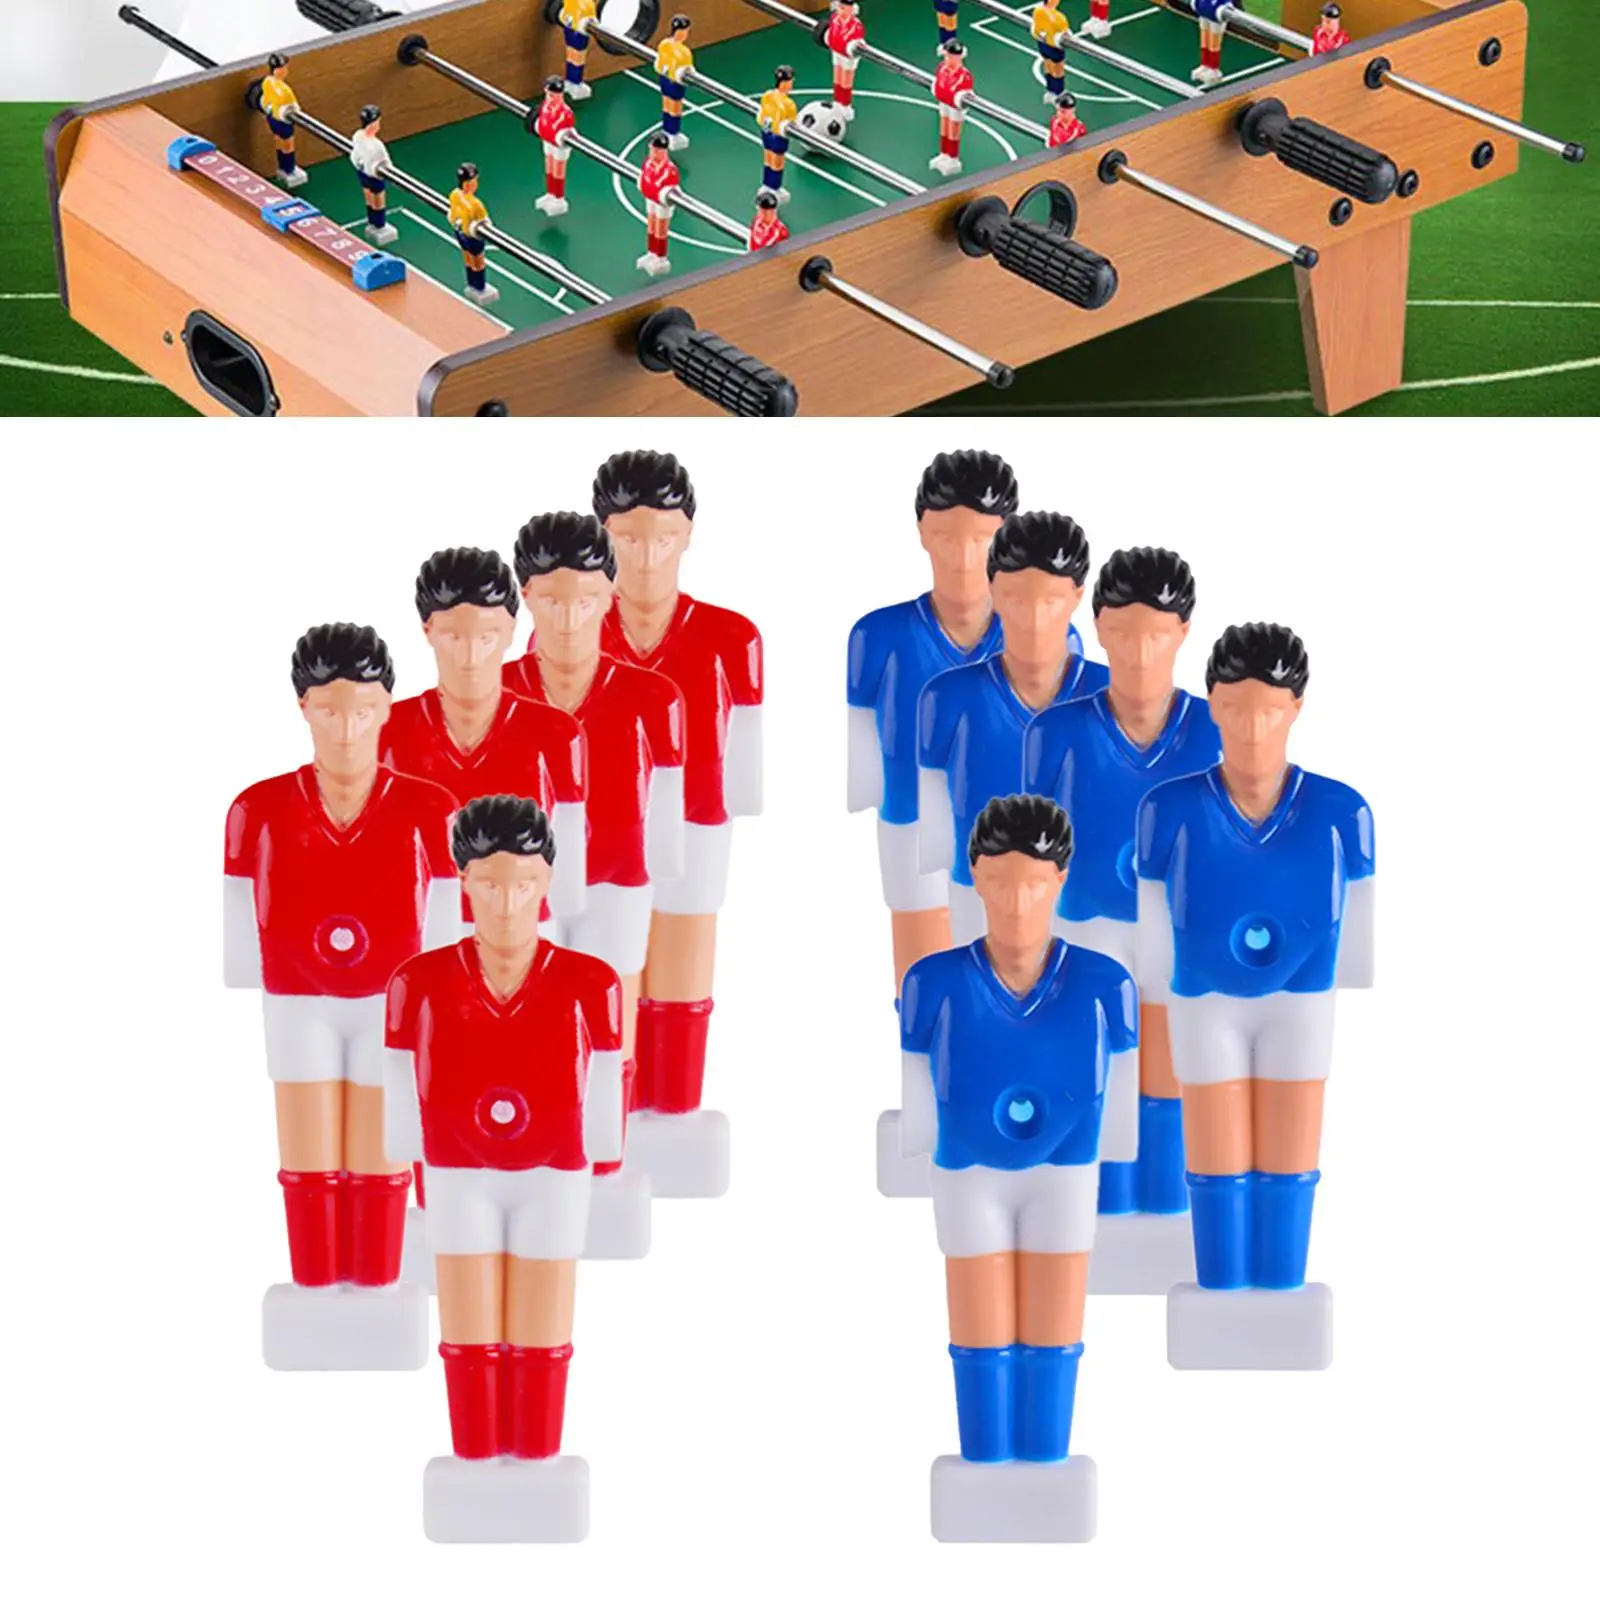 Foosball Player Soccer Games Mini Humanoid Doll Table Football Machine Accessory